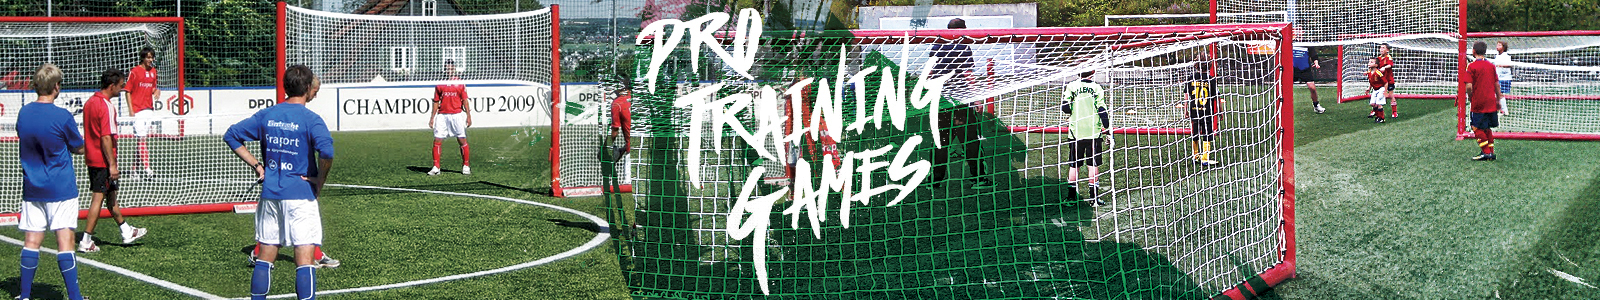 ASSOCIATION SPORTIVE DE PRO-TRAINING GAMES : site officiel du club de foot de Perpignan - footeo